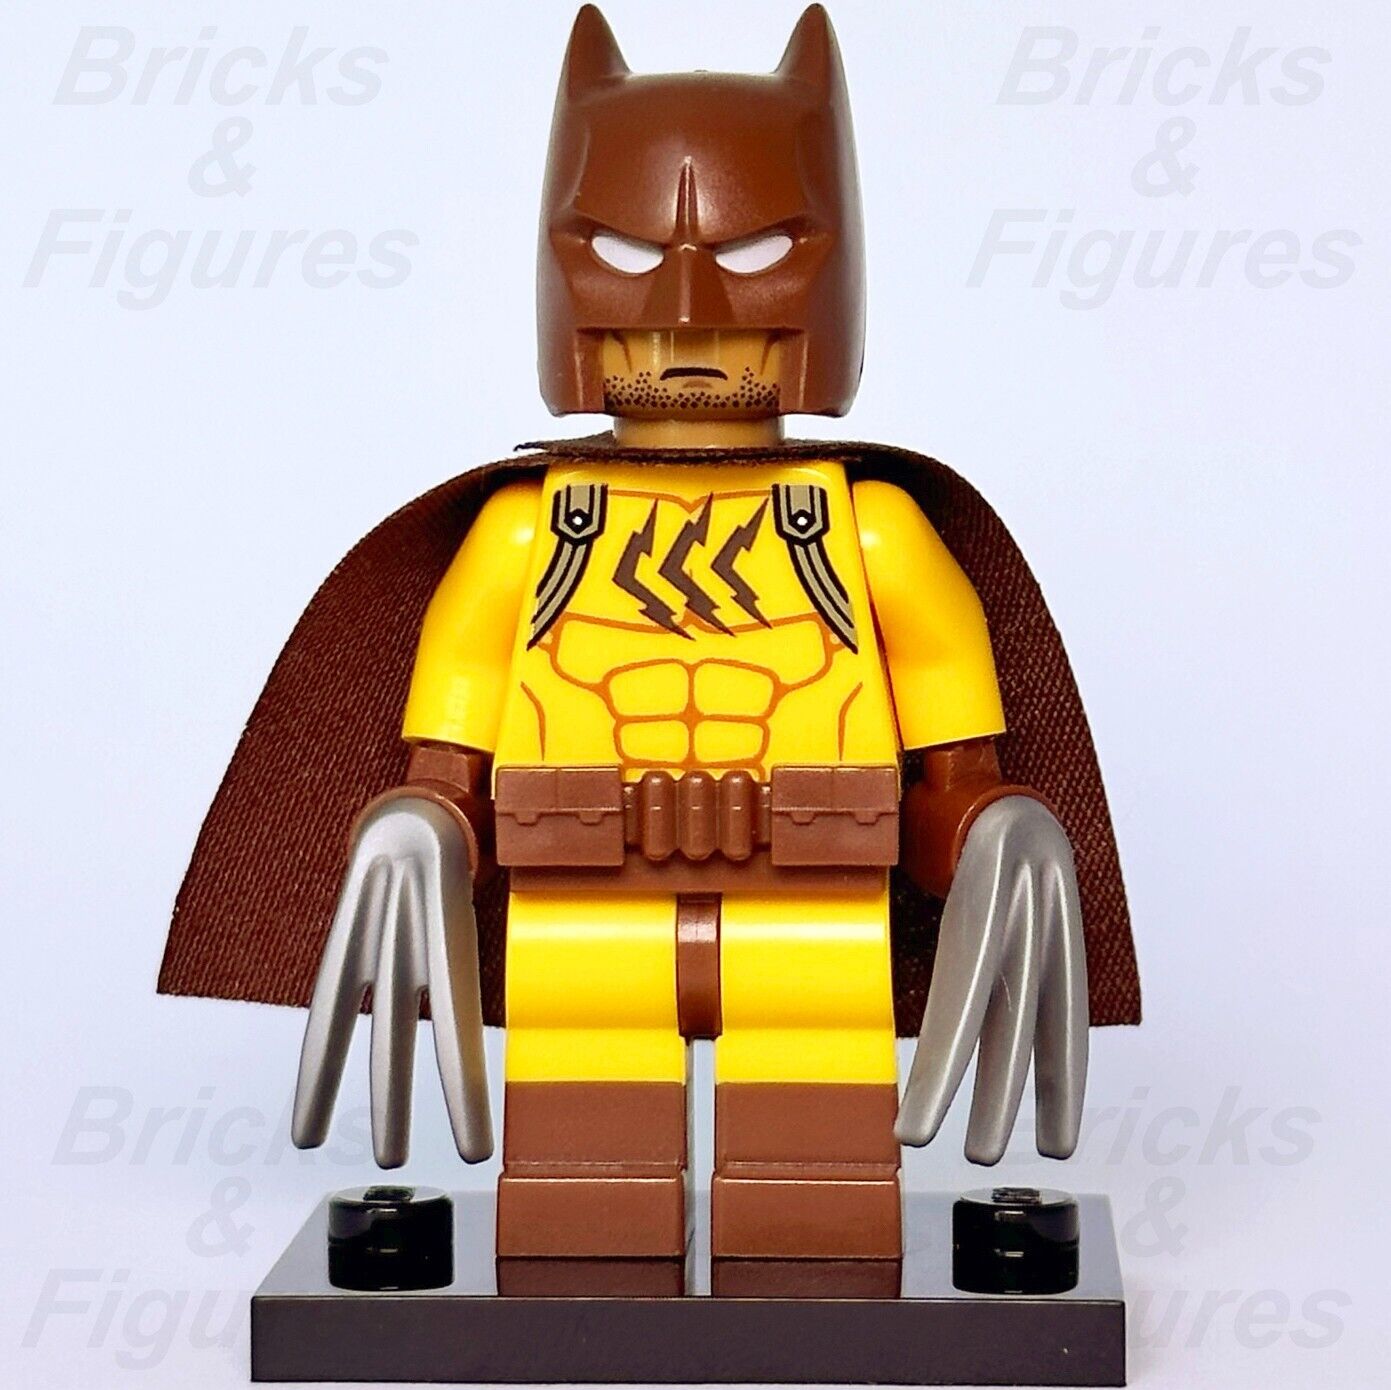 LEGO Catman The Batman Movie DC Super Heroes Minifigure 71017 Collectible New - Bricks & Figures